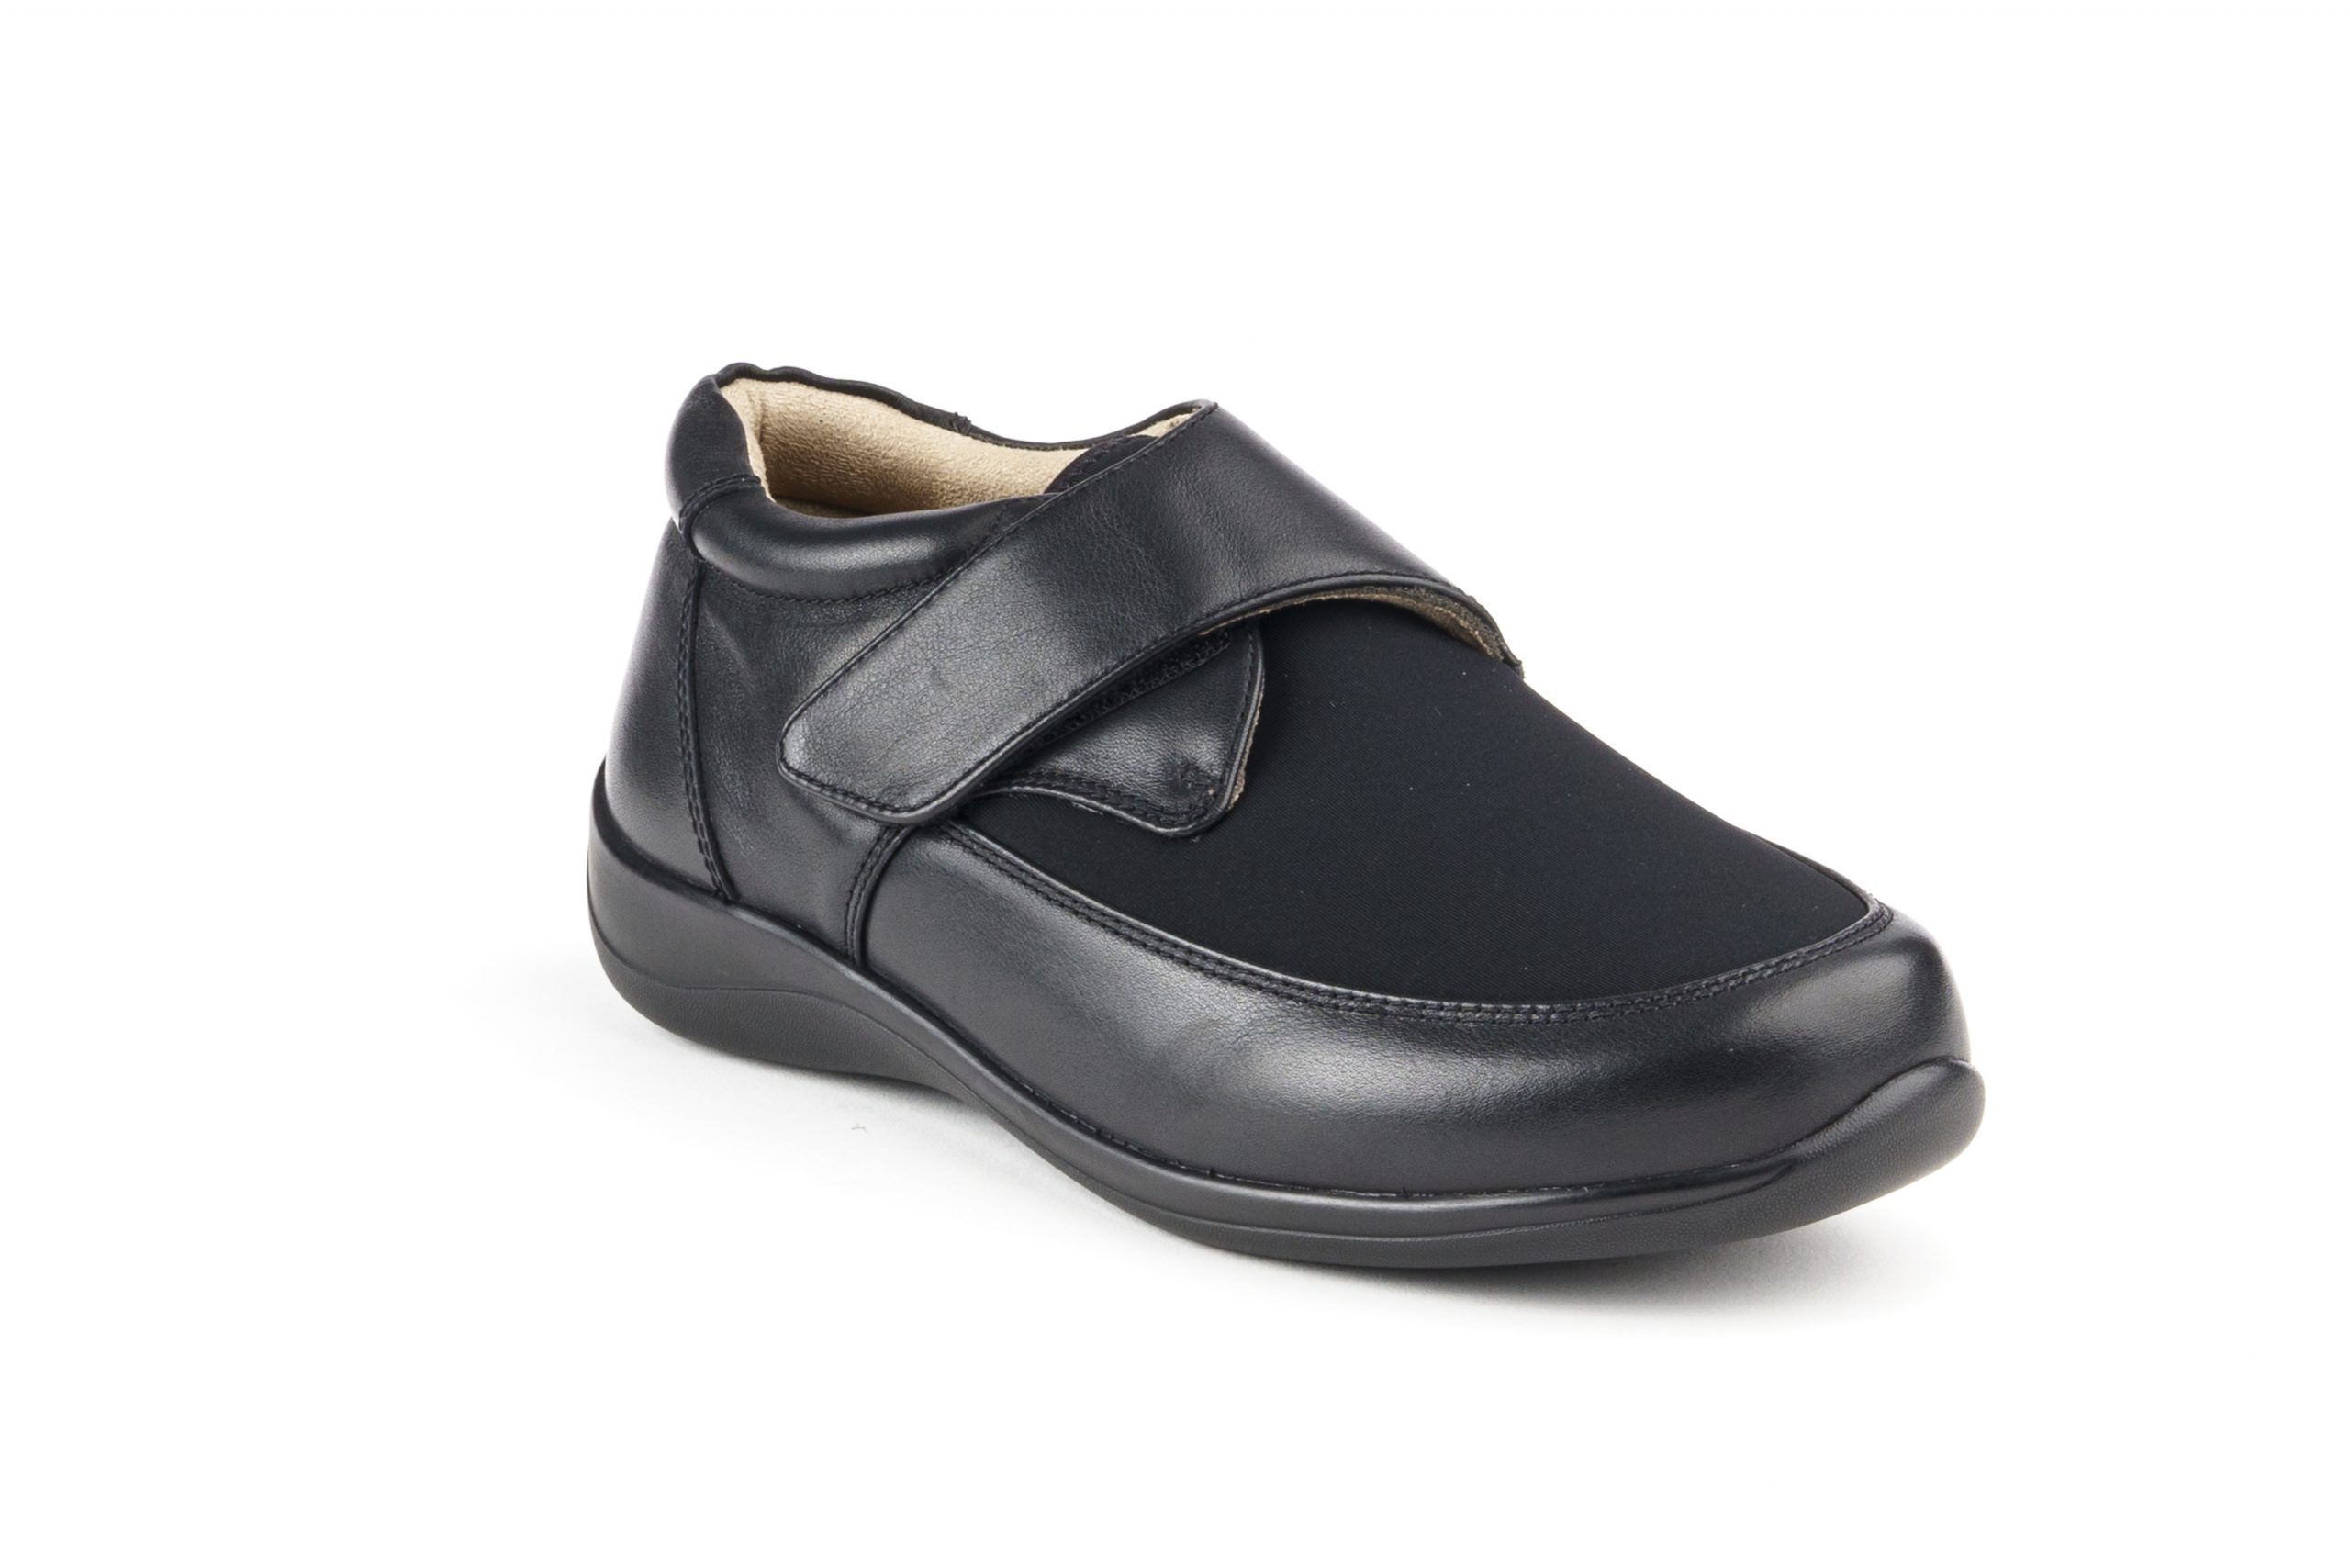 OC Jim Stretch - Gadean Footwear